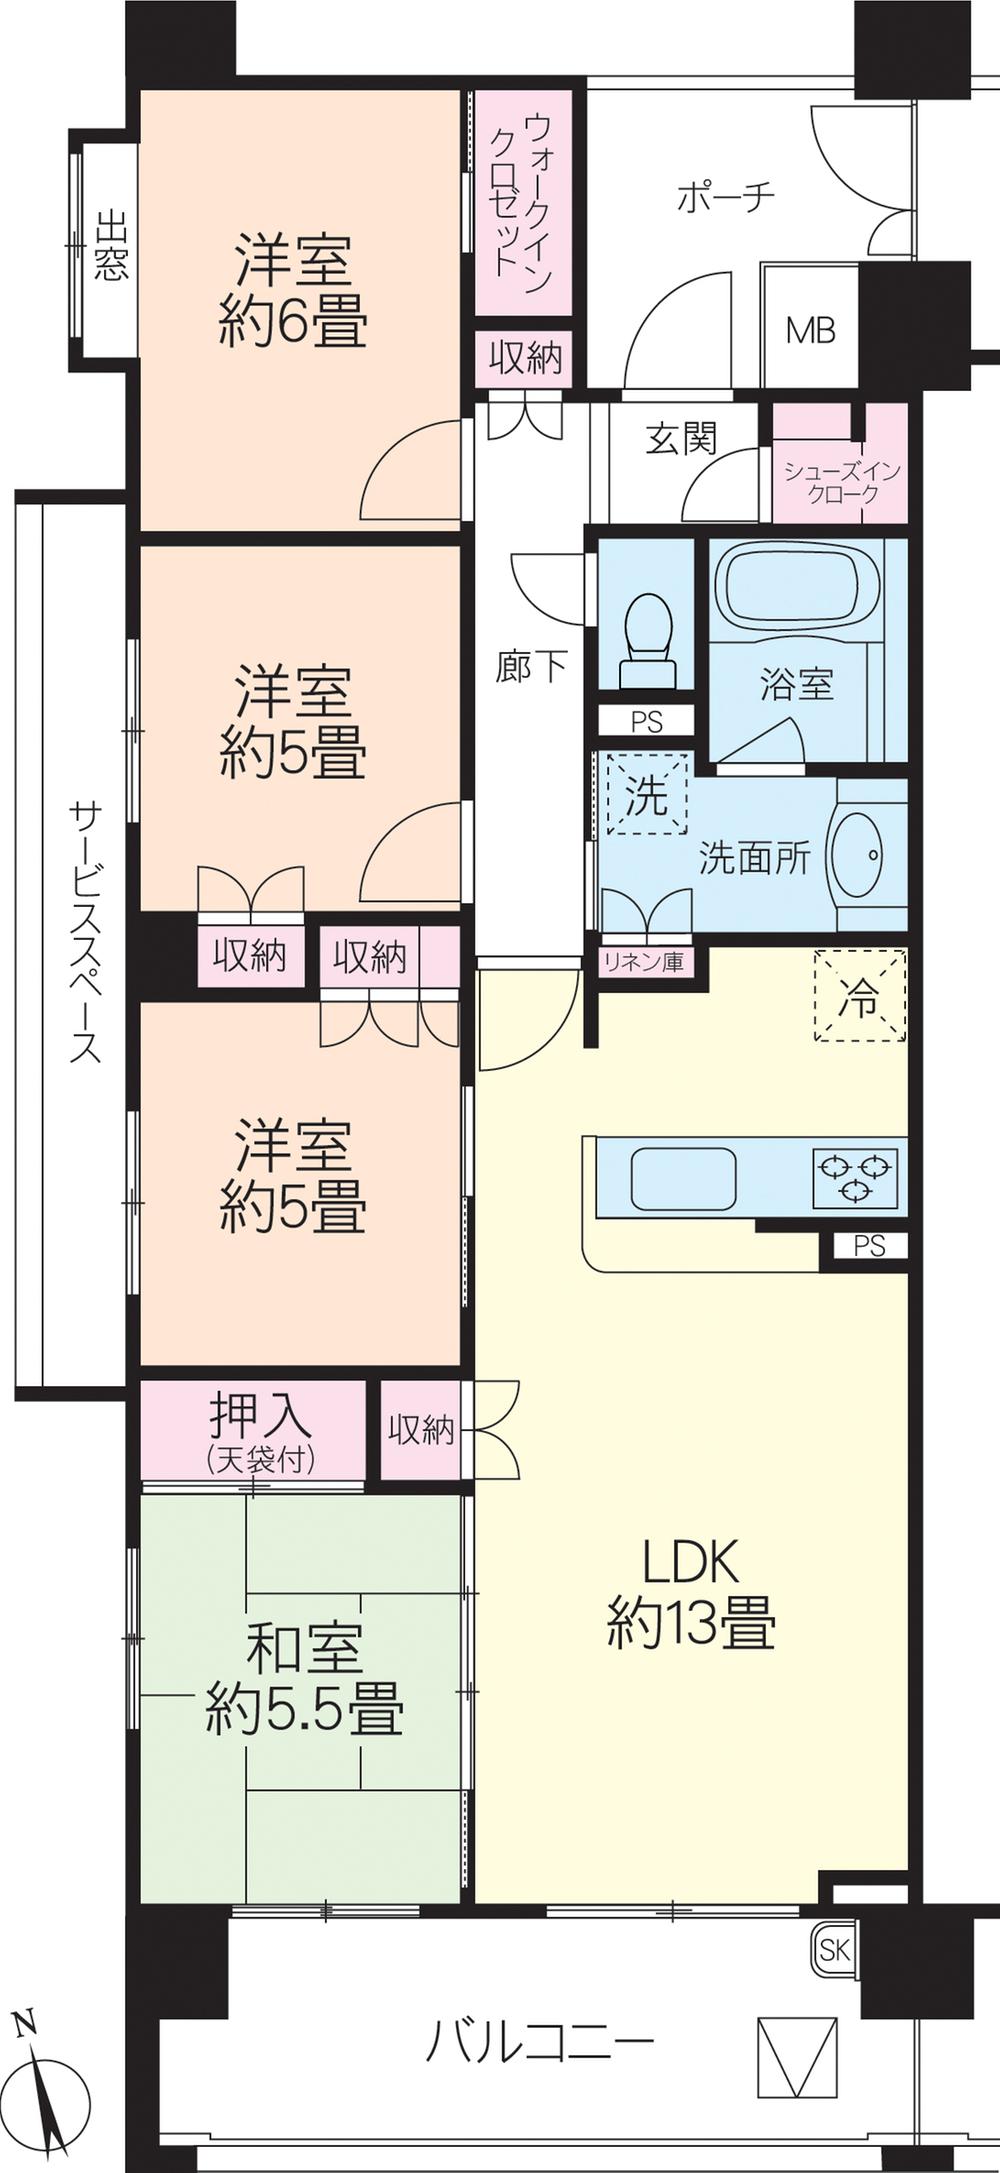 Floor plan. 4LDK, Price 27 million yen, Occupied area 83.78 sq m , Balcony area 12.4 sq m